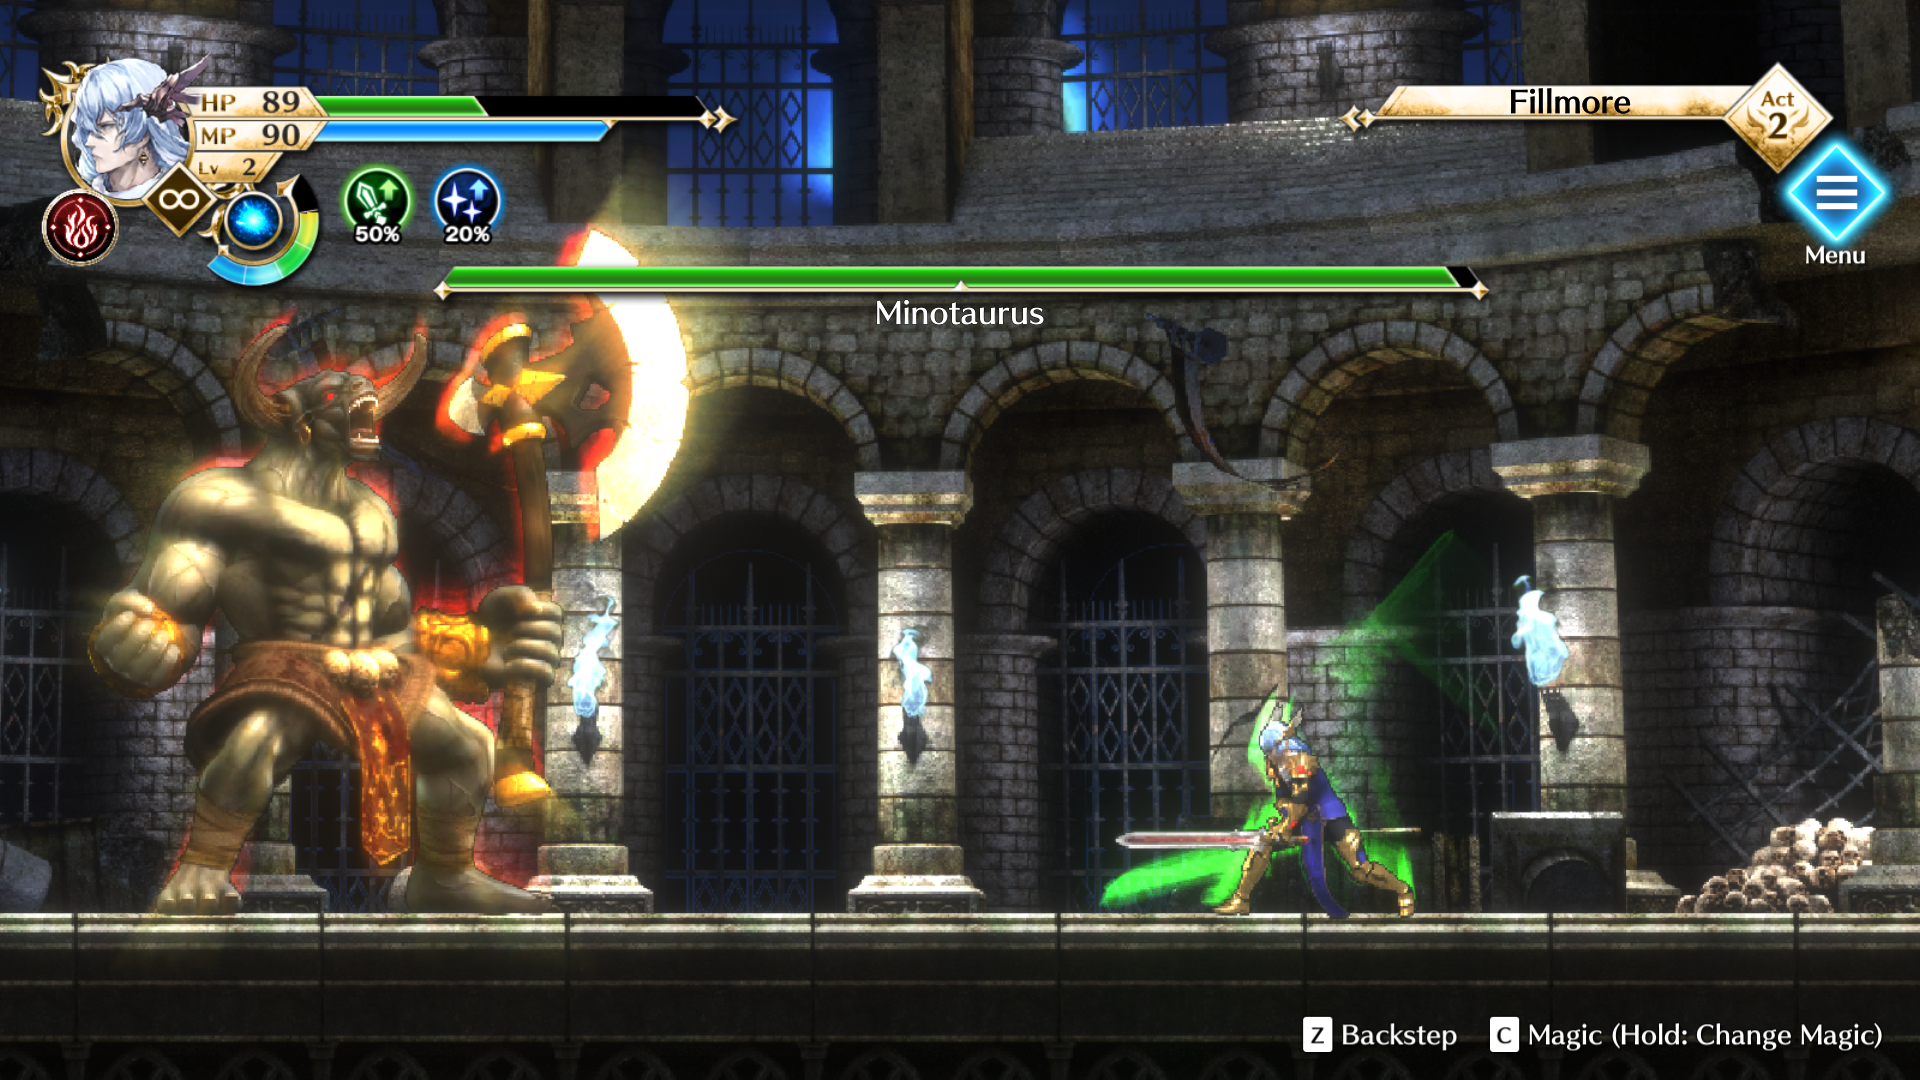 Gameplay screenshot of the Actraiser Renaissance protagonist in a battle against a Minotaurus enemy.